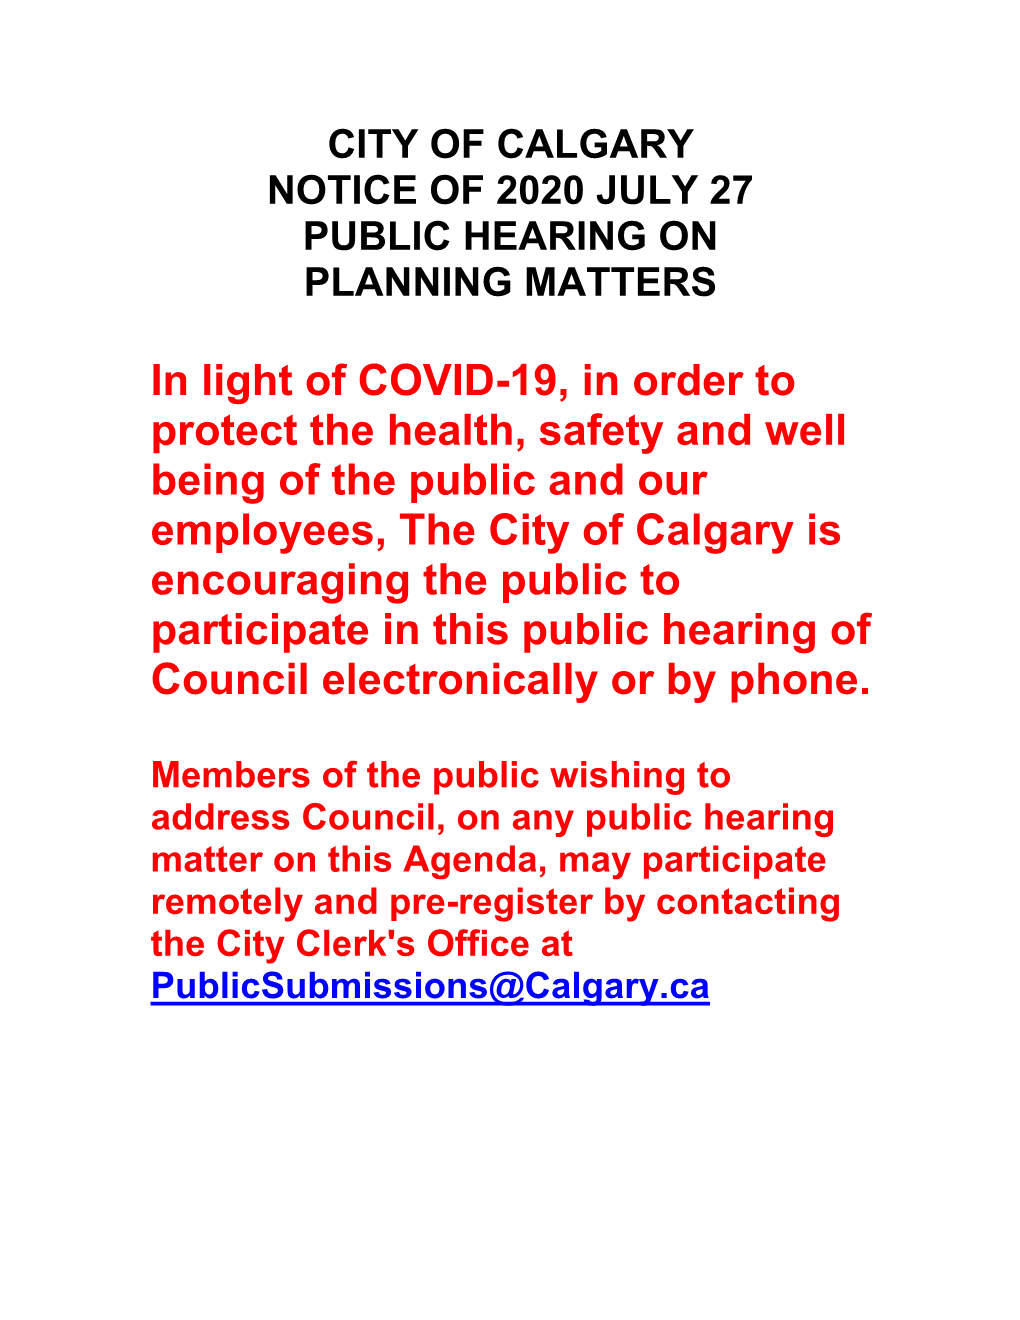 Public Hearing on Planning Matters: Monday, July 27, 2020